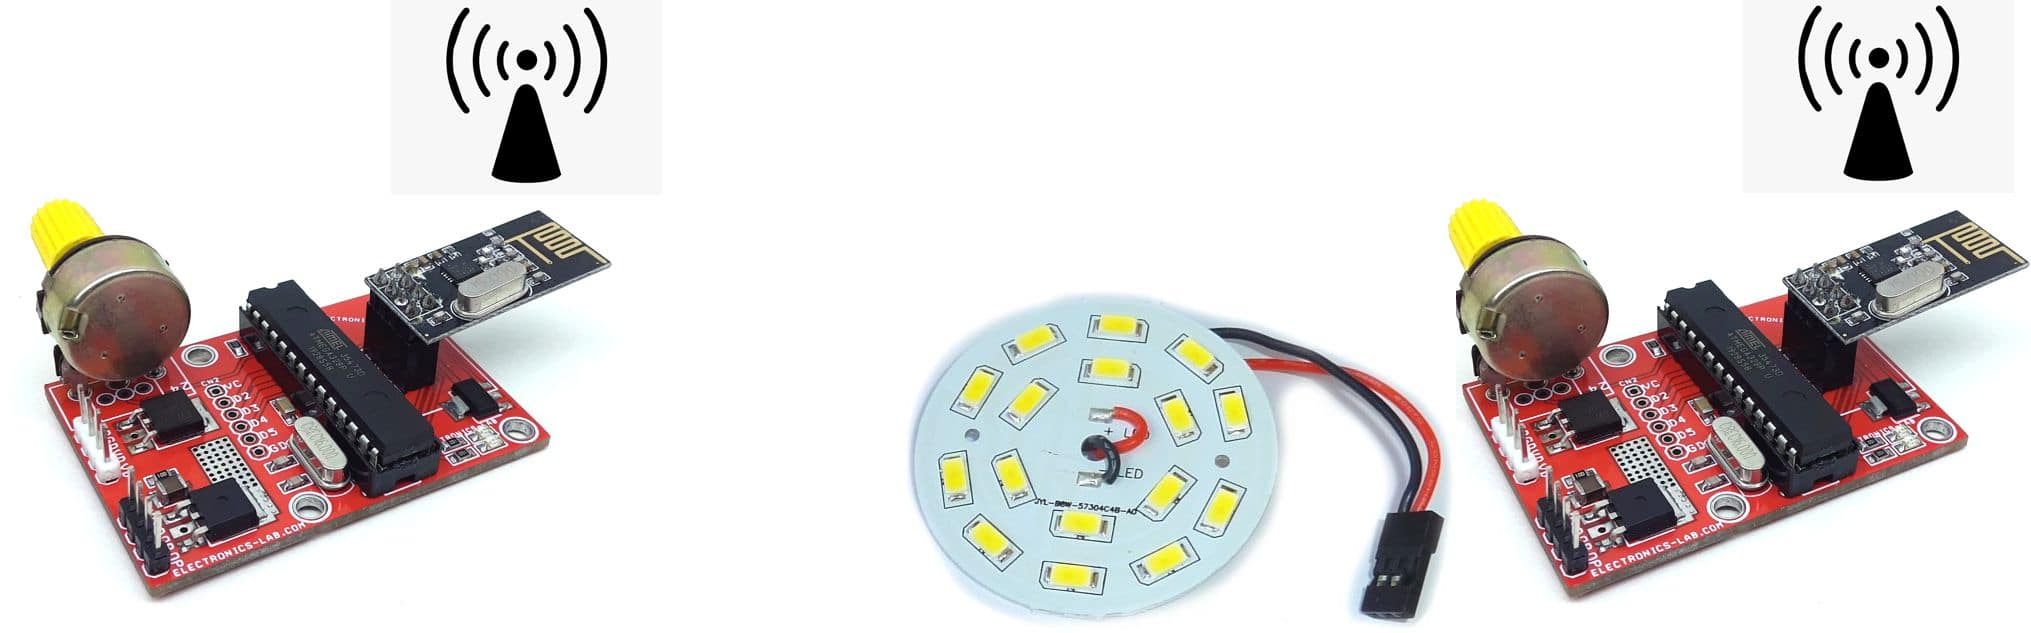 Atenuador LED tutorial NRF24L01 arduino Dimmer